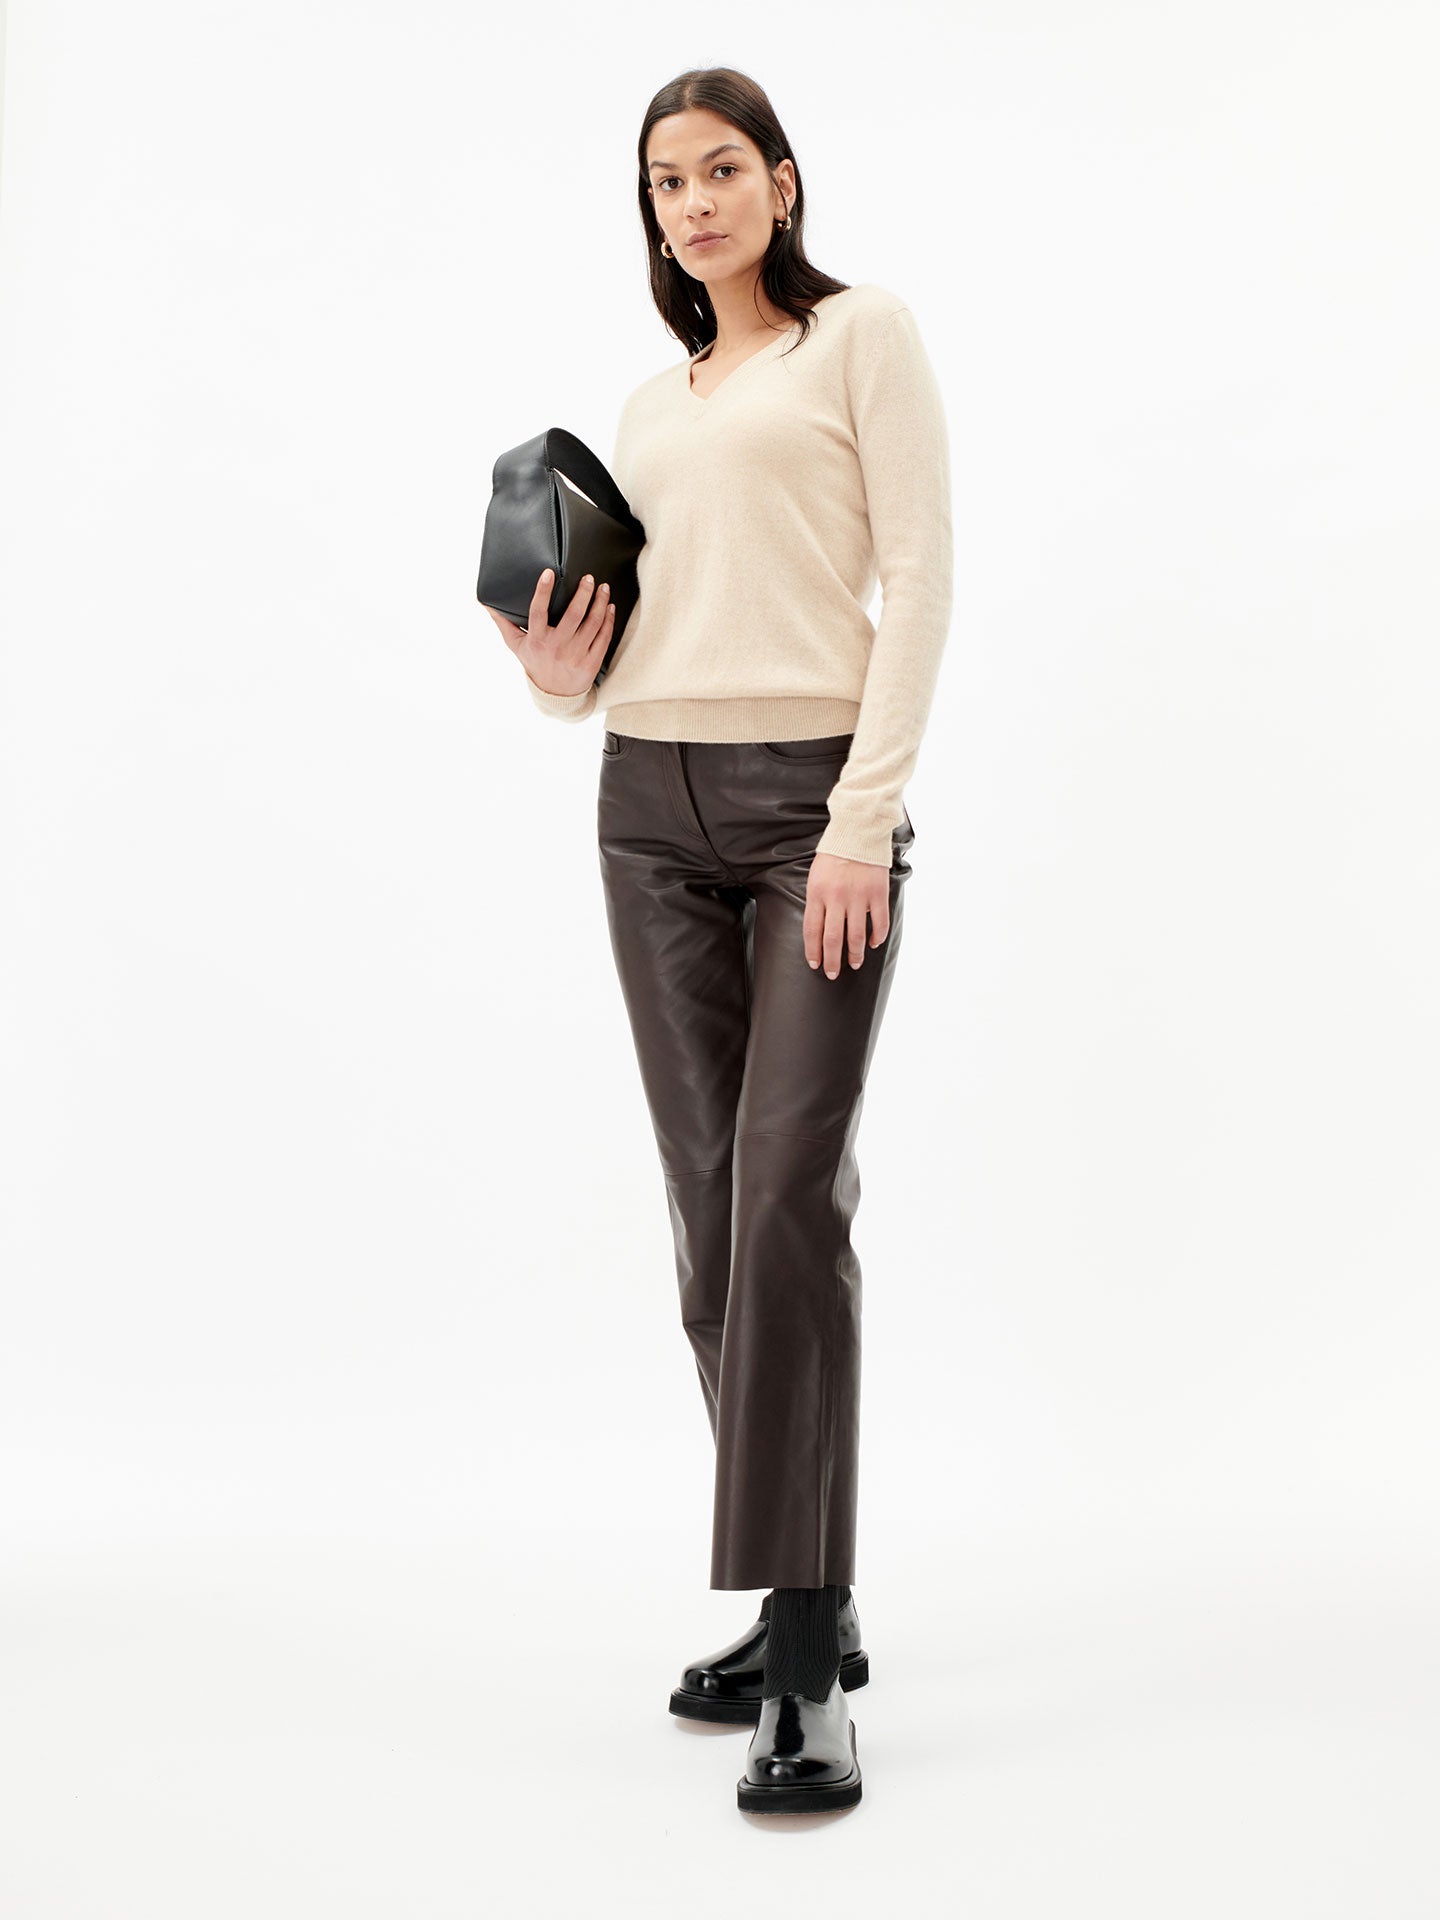 Women's Cashmere Basic V-Neck Sweater Beige - Gobi Cashmere